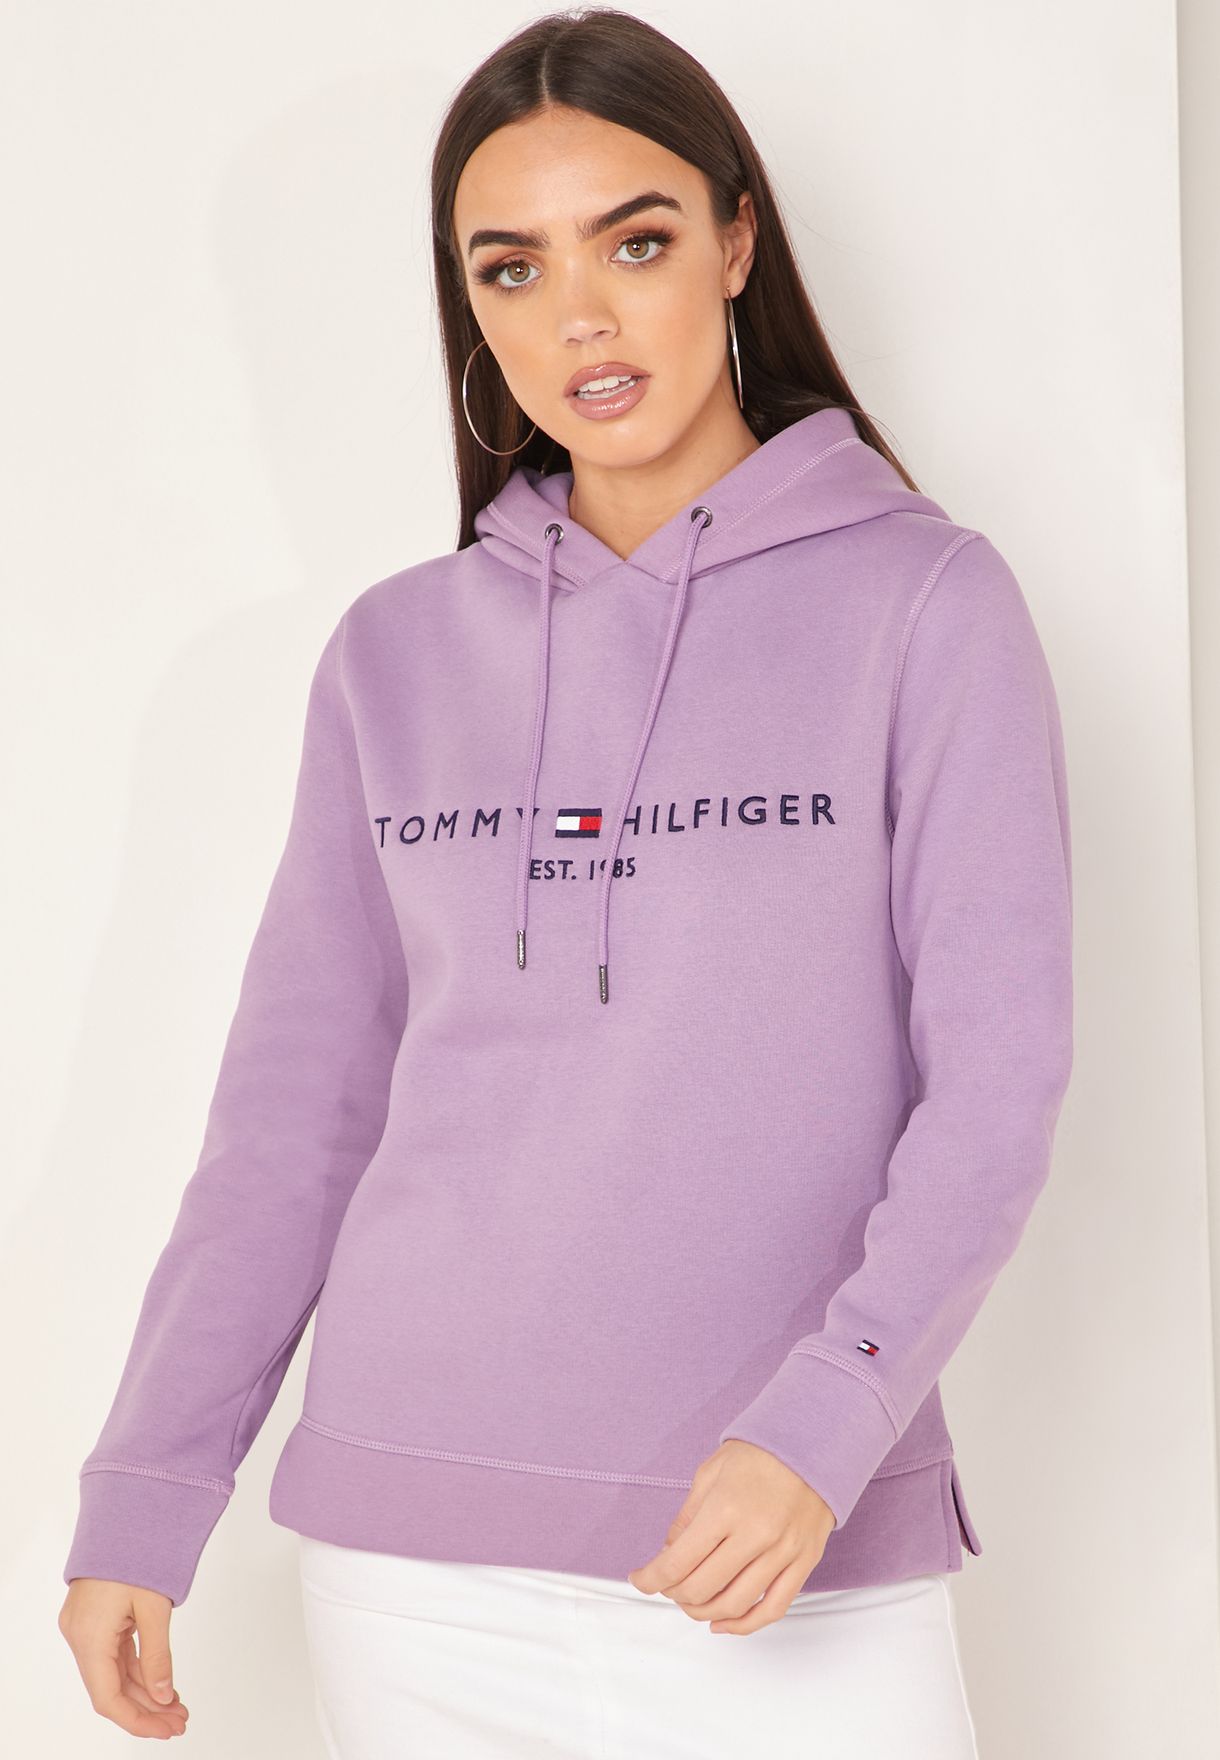 tommy hilfiger zip up hoodie womens